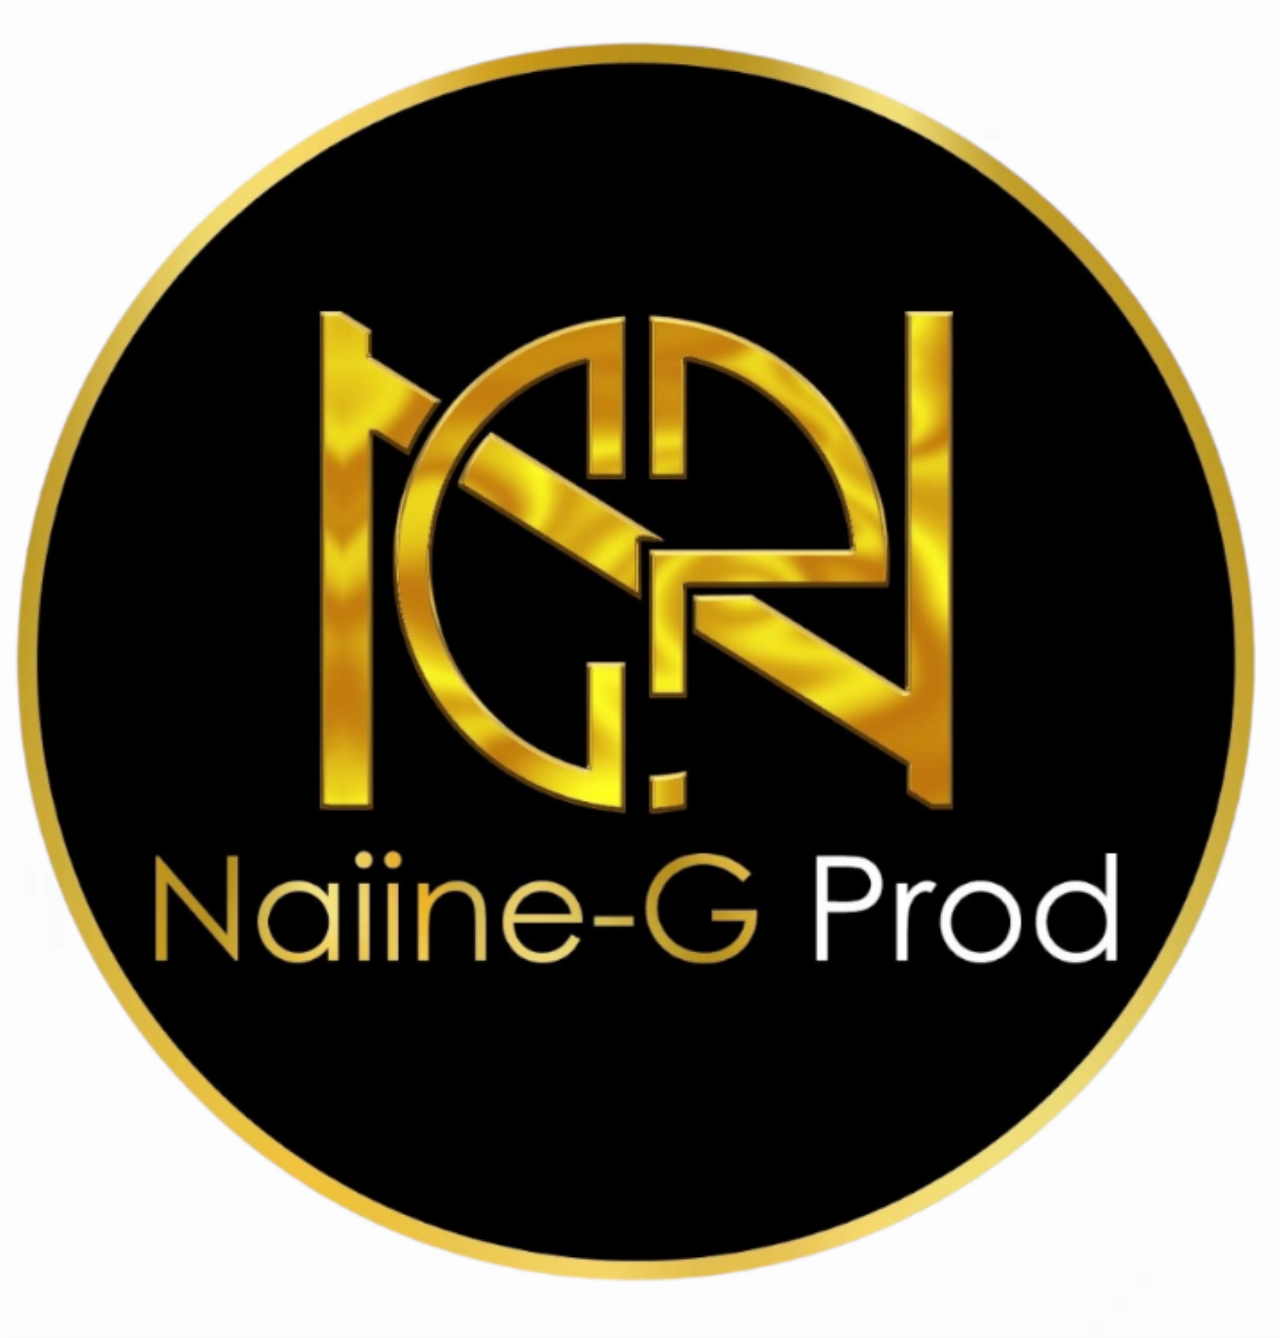 Naiine-G-Prod's logo